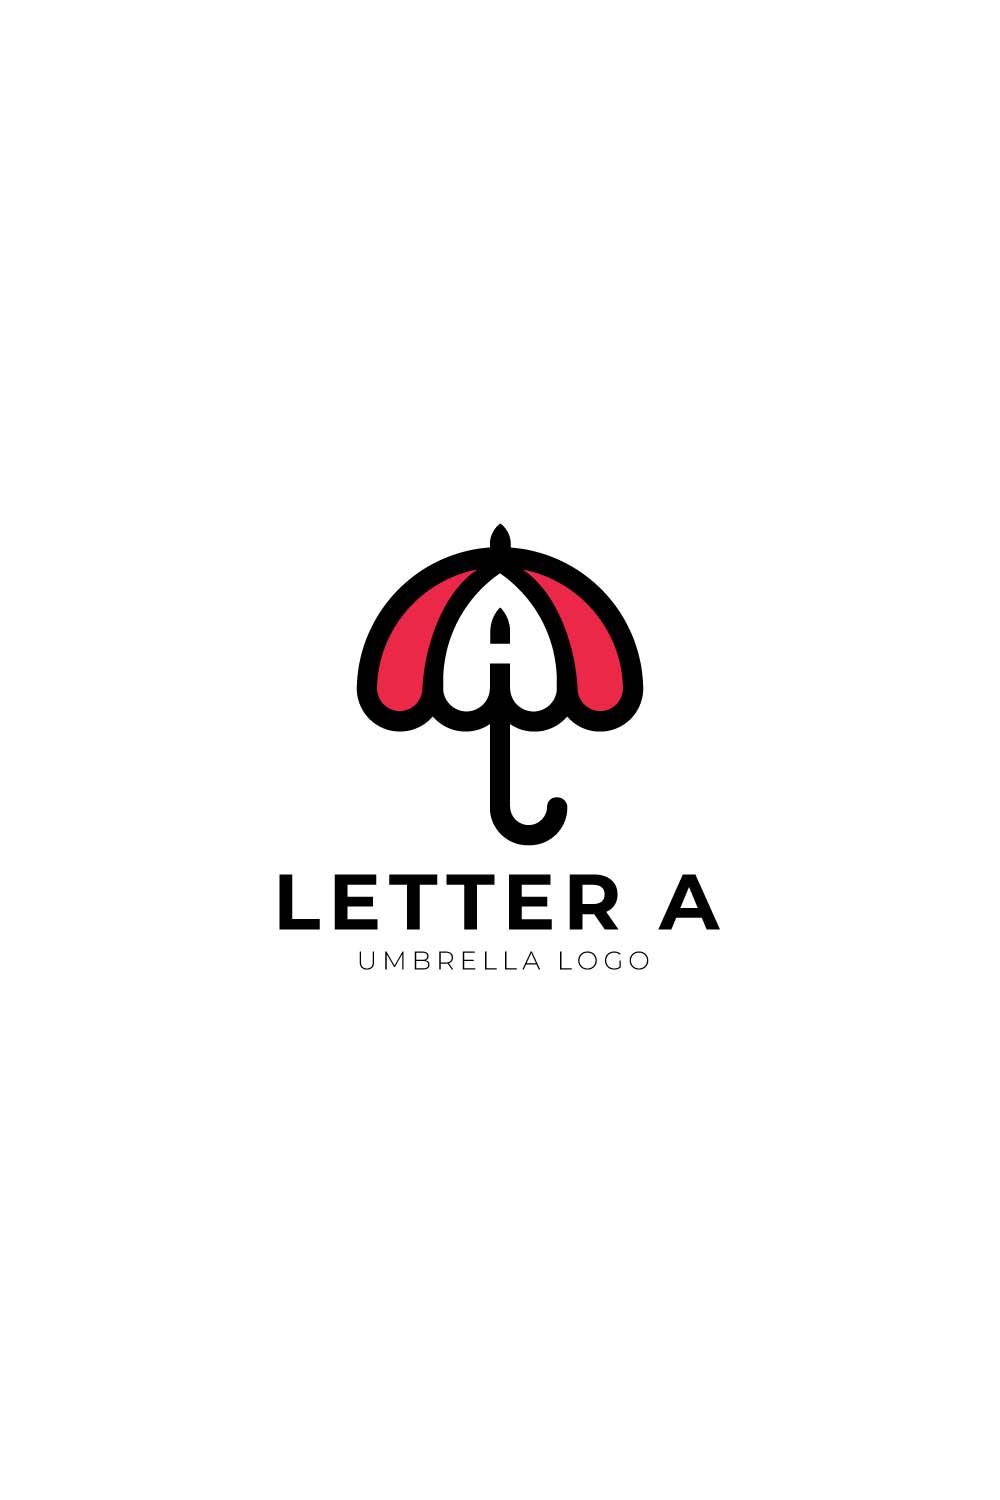 Professional Letter A Umbrella Logo design pinterest preview image.